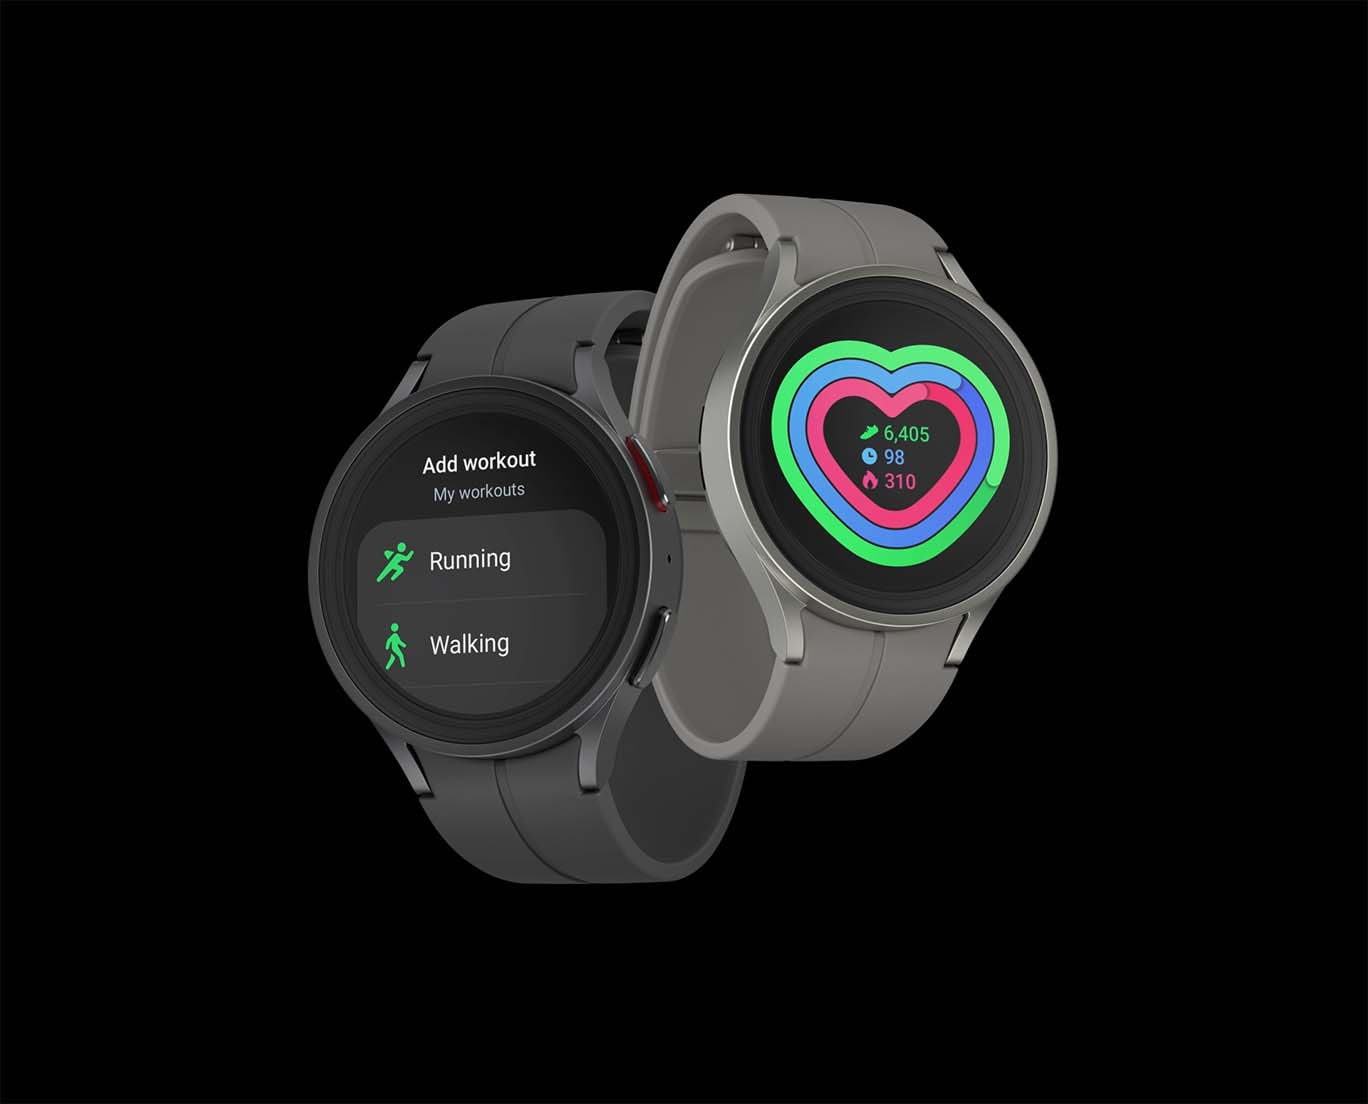 Fitur olahraga Samsung Watch 5 Pro, lengkap dengan GPS tracker, Sapphire Crystal, dan kapasitas baterai besar. Beli Galaxy Watch 5 Pro garansi resmi di Samsung Indonesia.